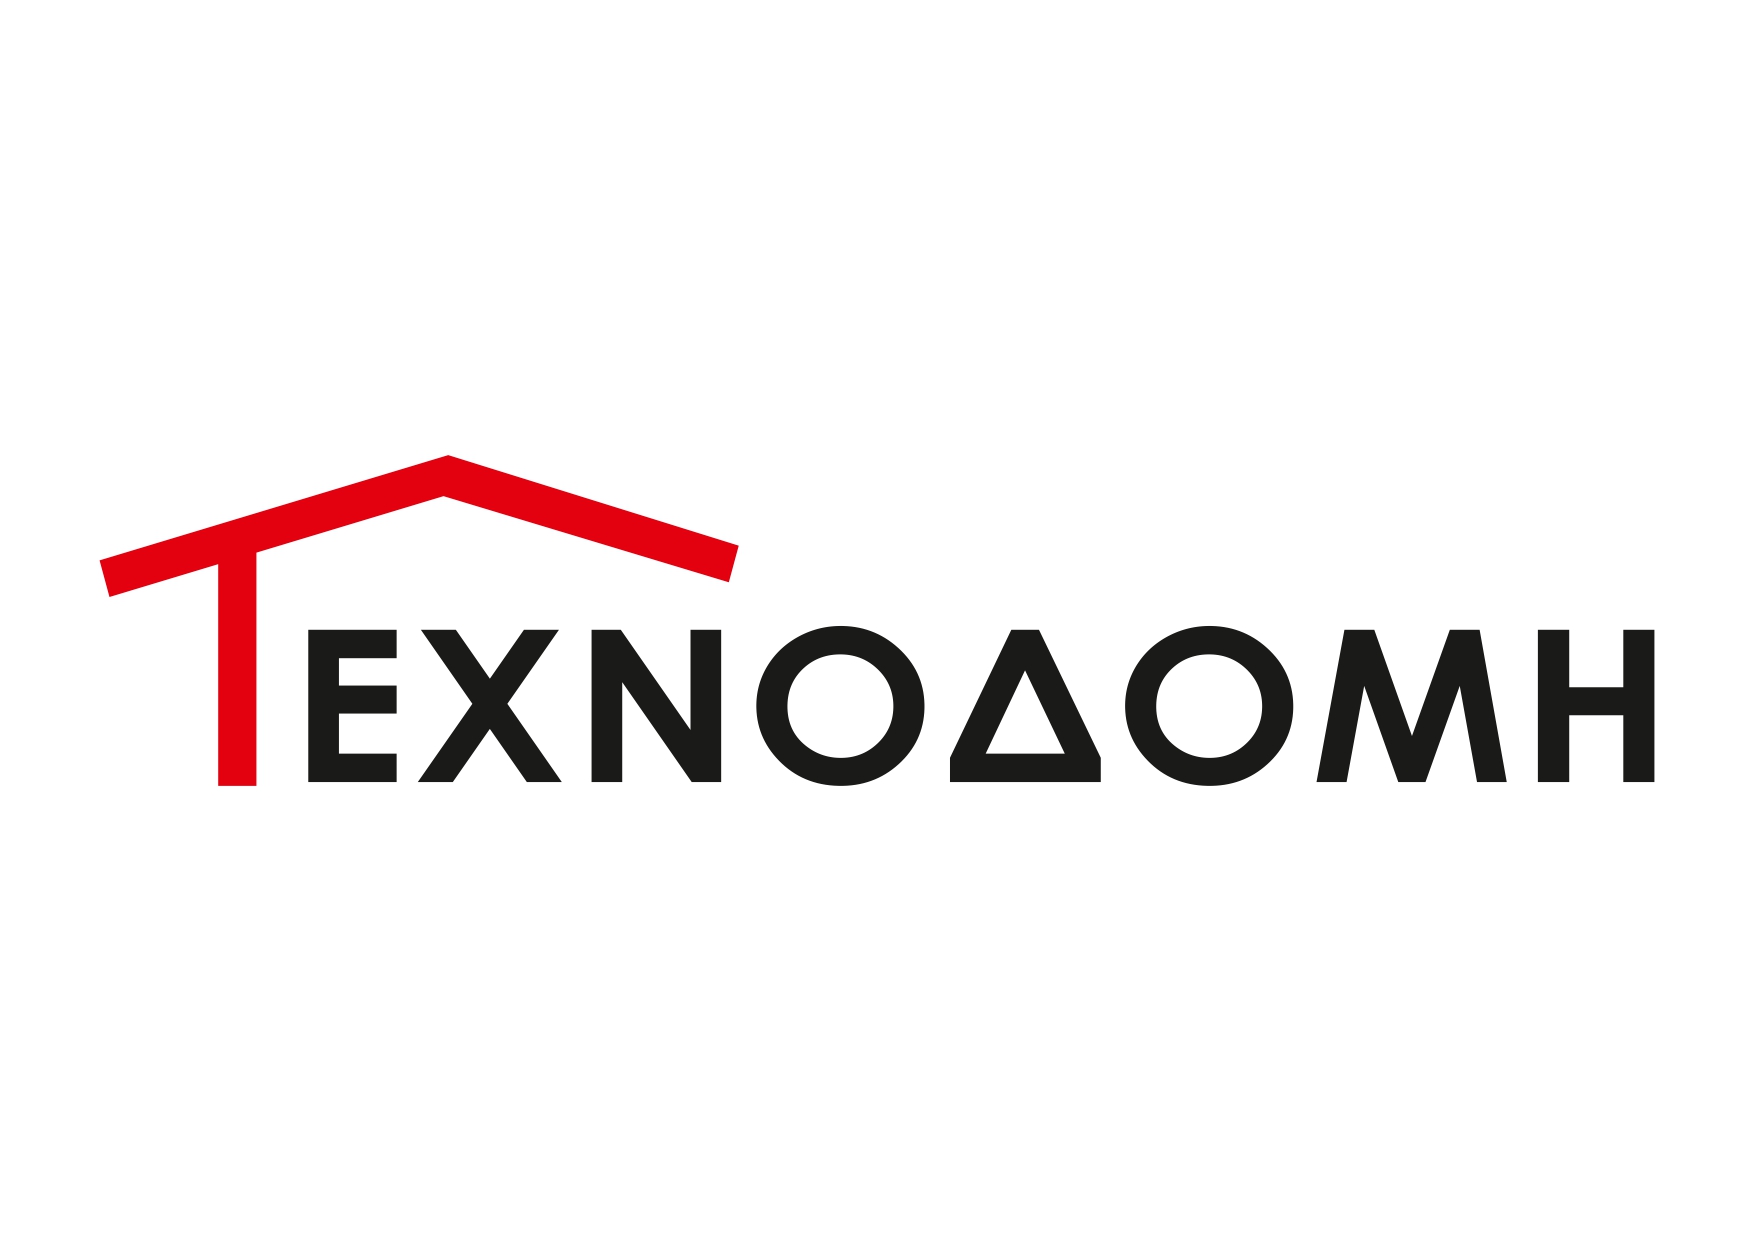 technodomi logo (1)_page-0001.jpg